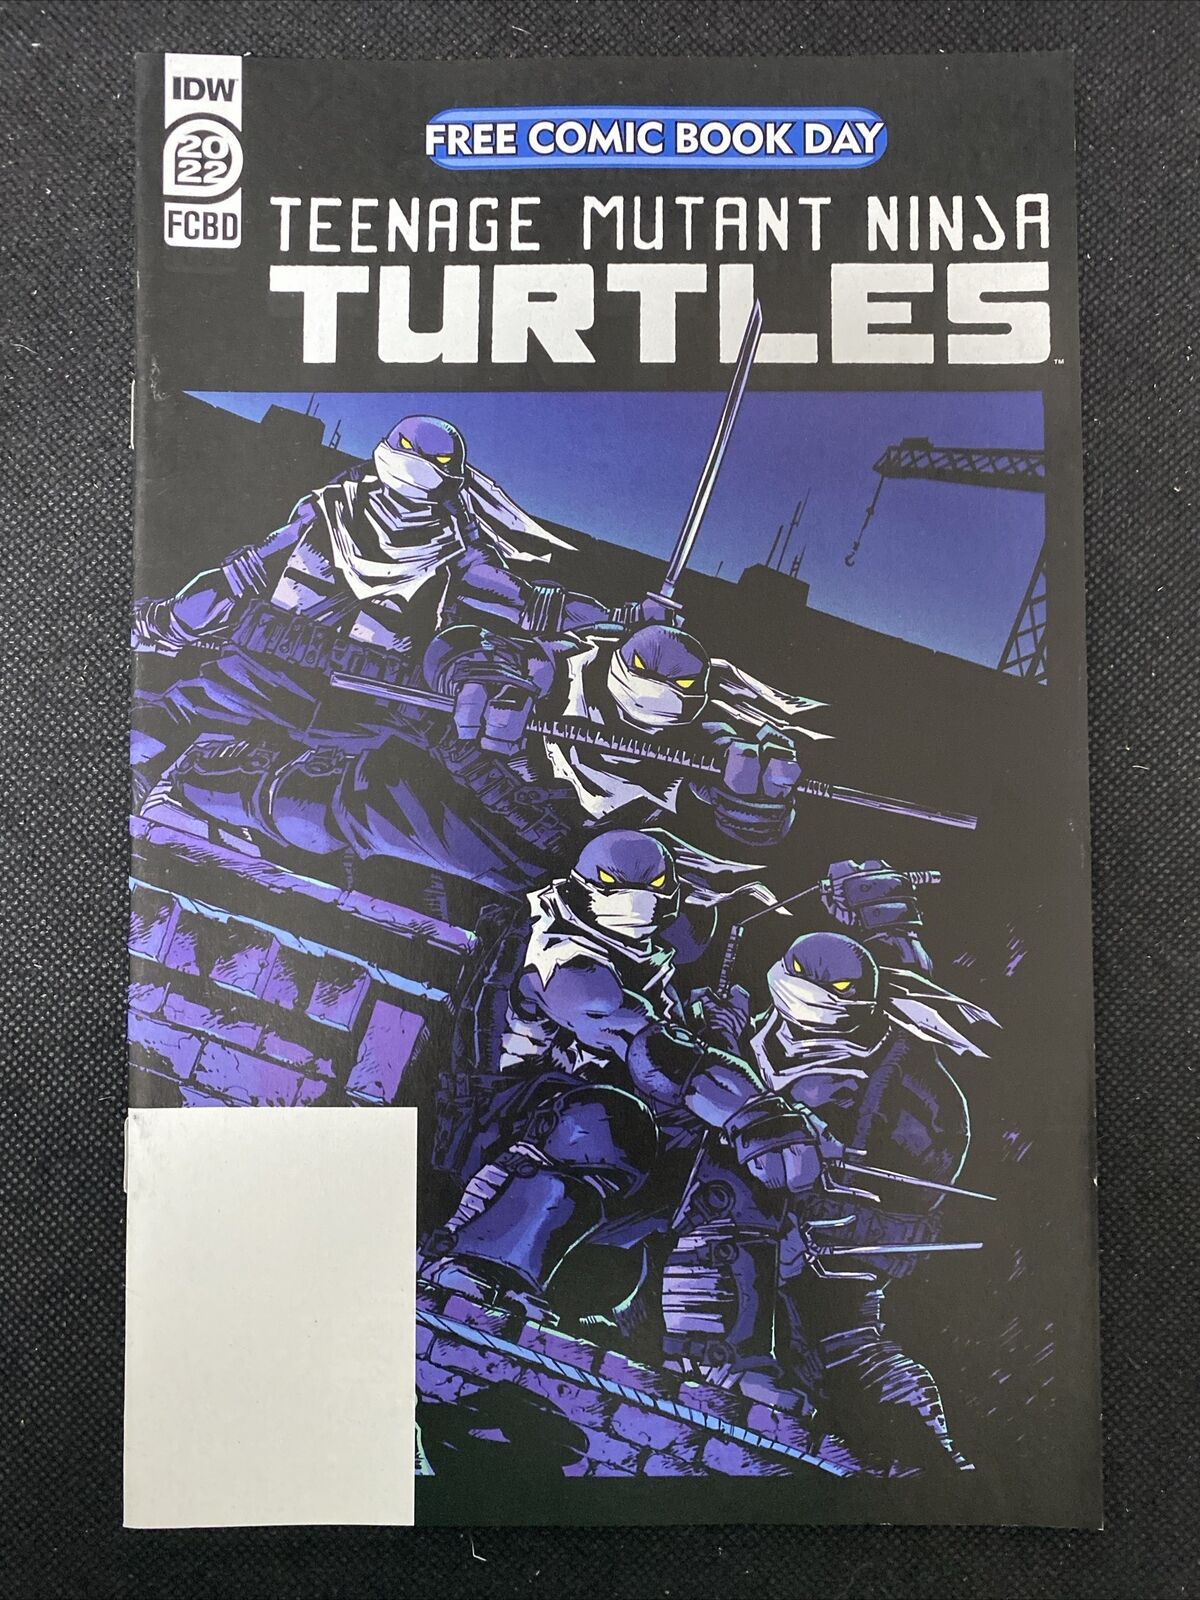 FREE COMIC BOOK DAY 2020: Teenage Mutant Ninja Turtles #1 * IDW FCBD TMNT * NM